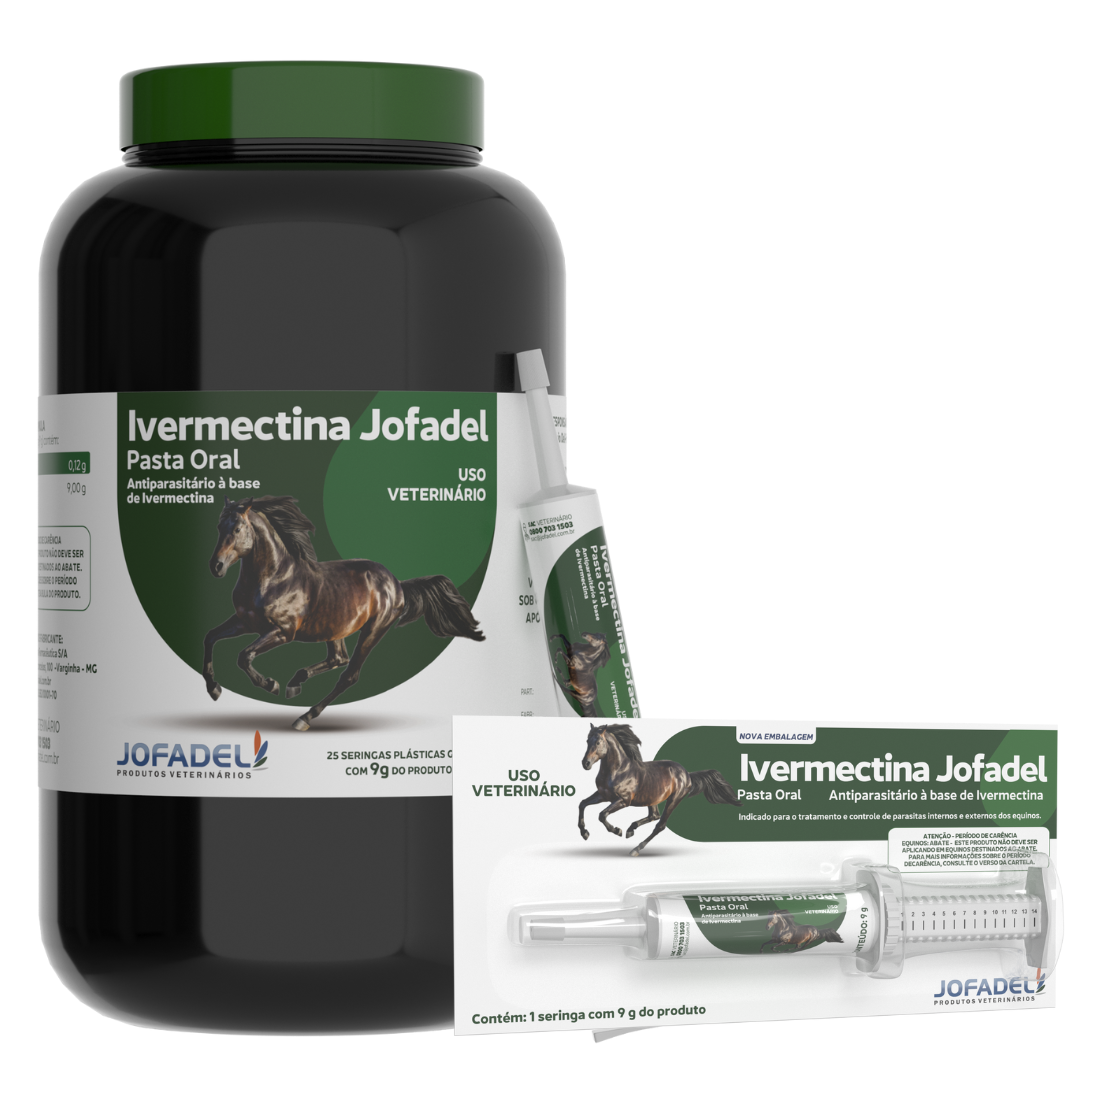 Ivermectina Jofadel® Pasta Oral